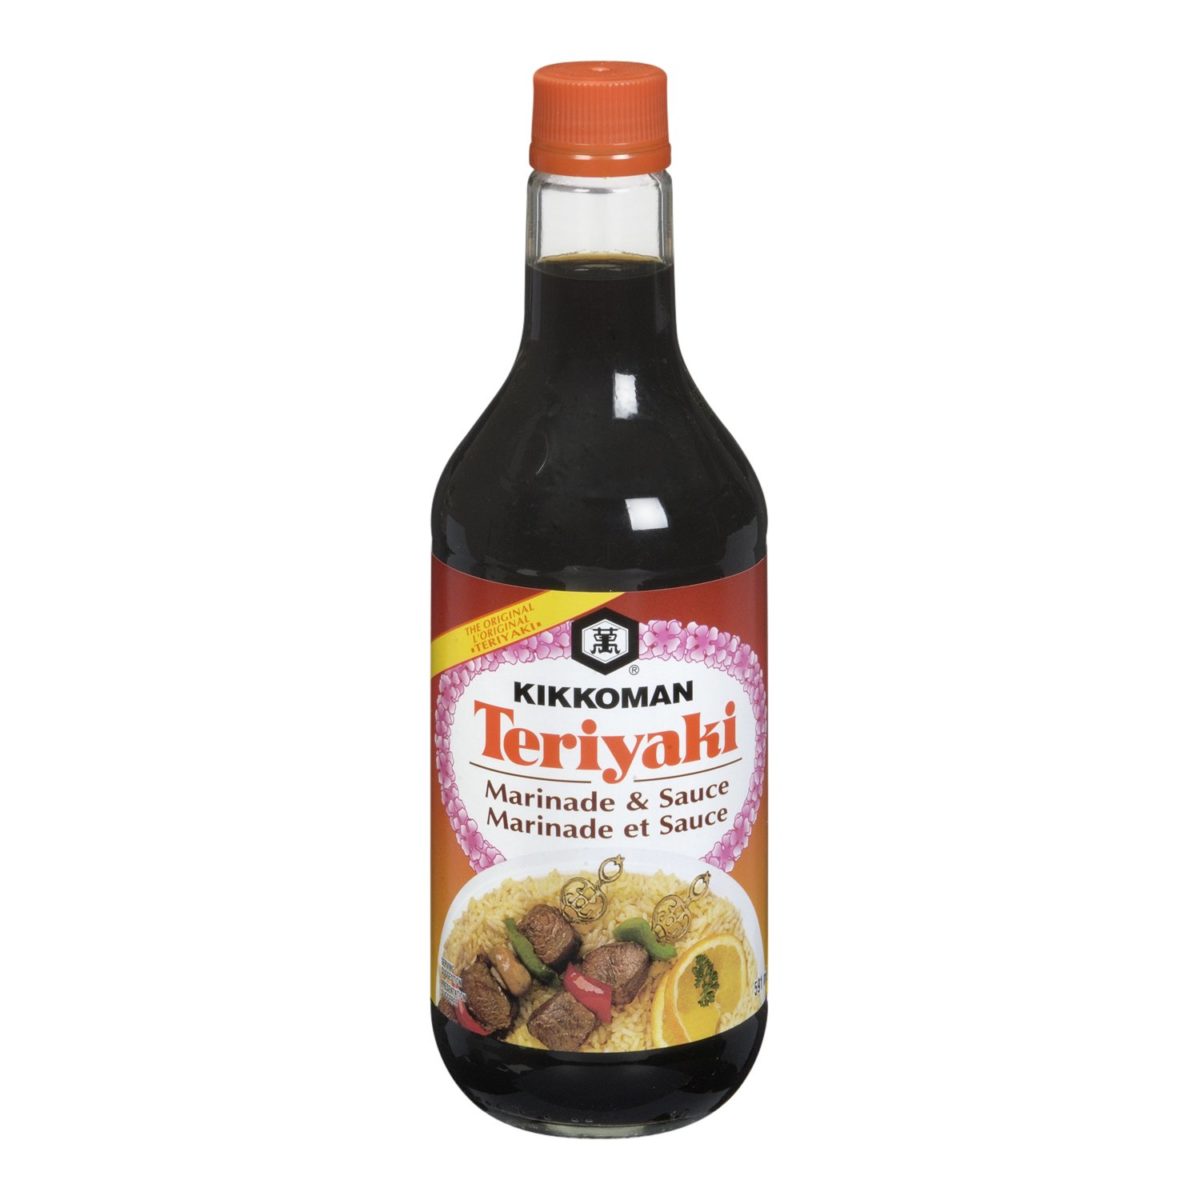 Kikkoman teriyaki sauce as a substitute for ponzu sauce